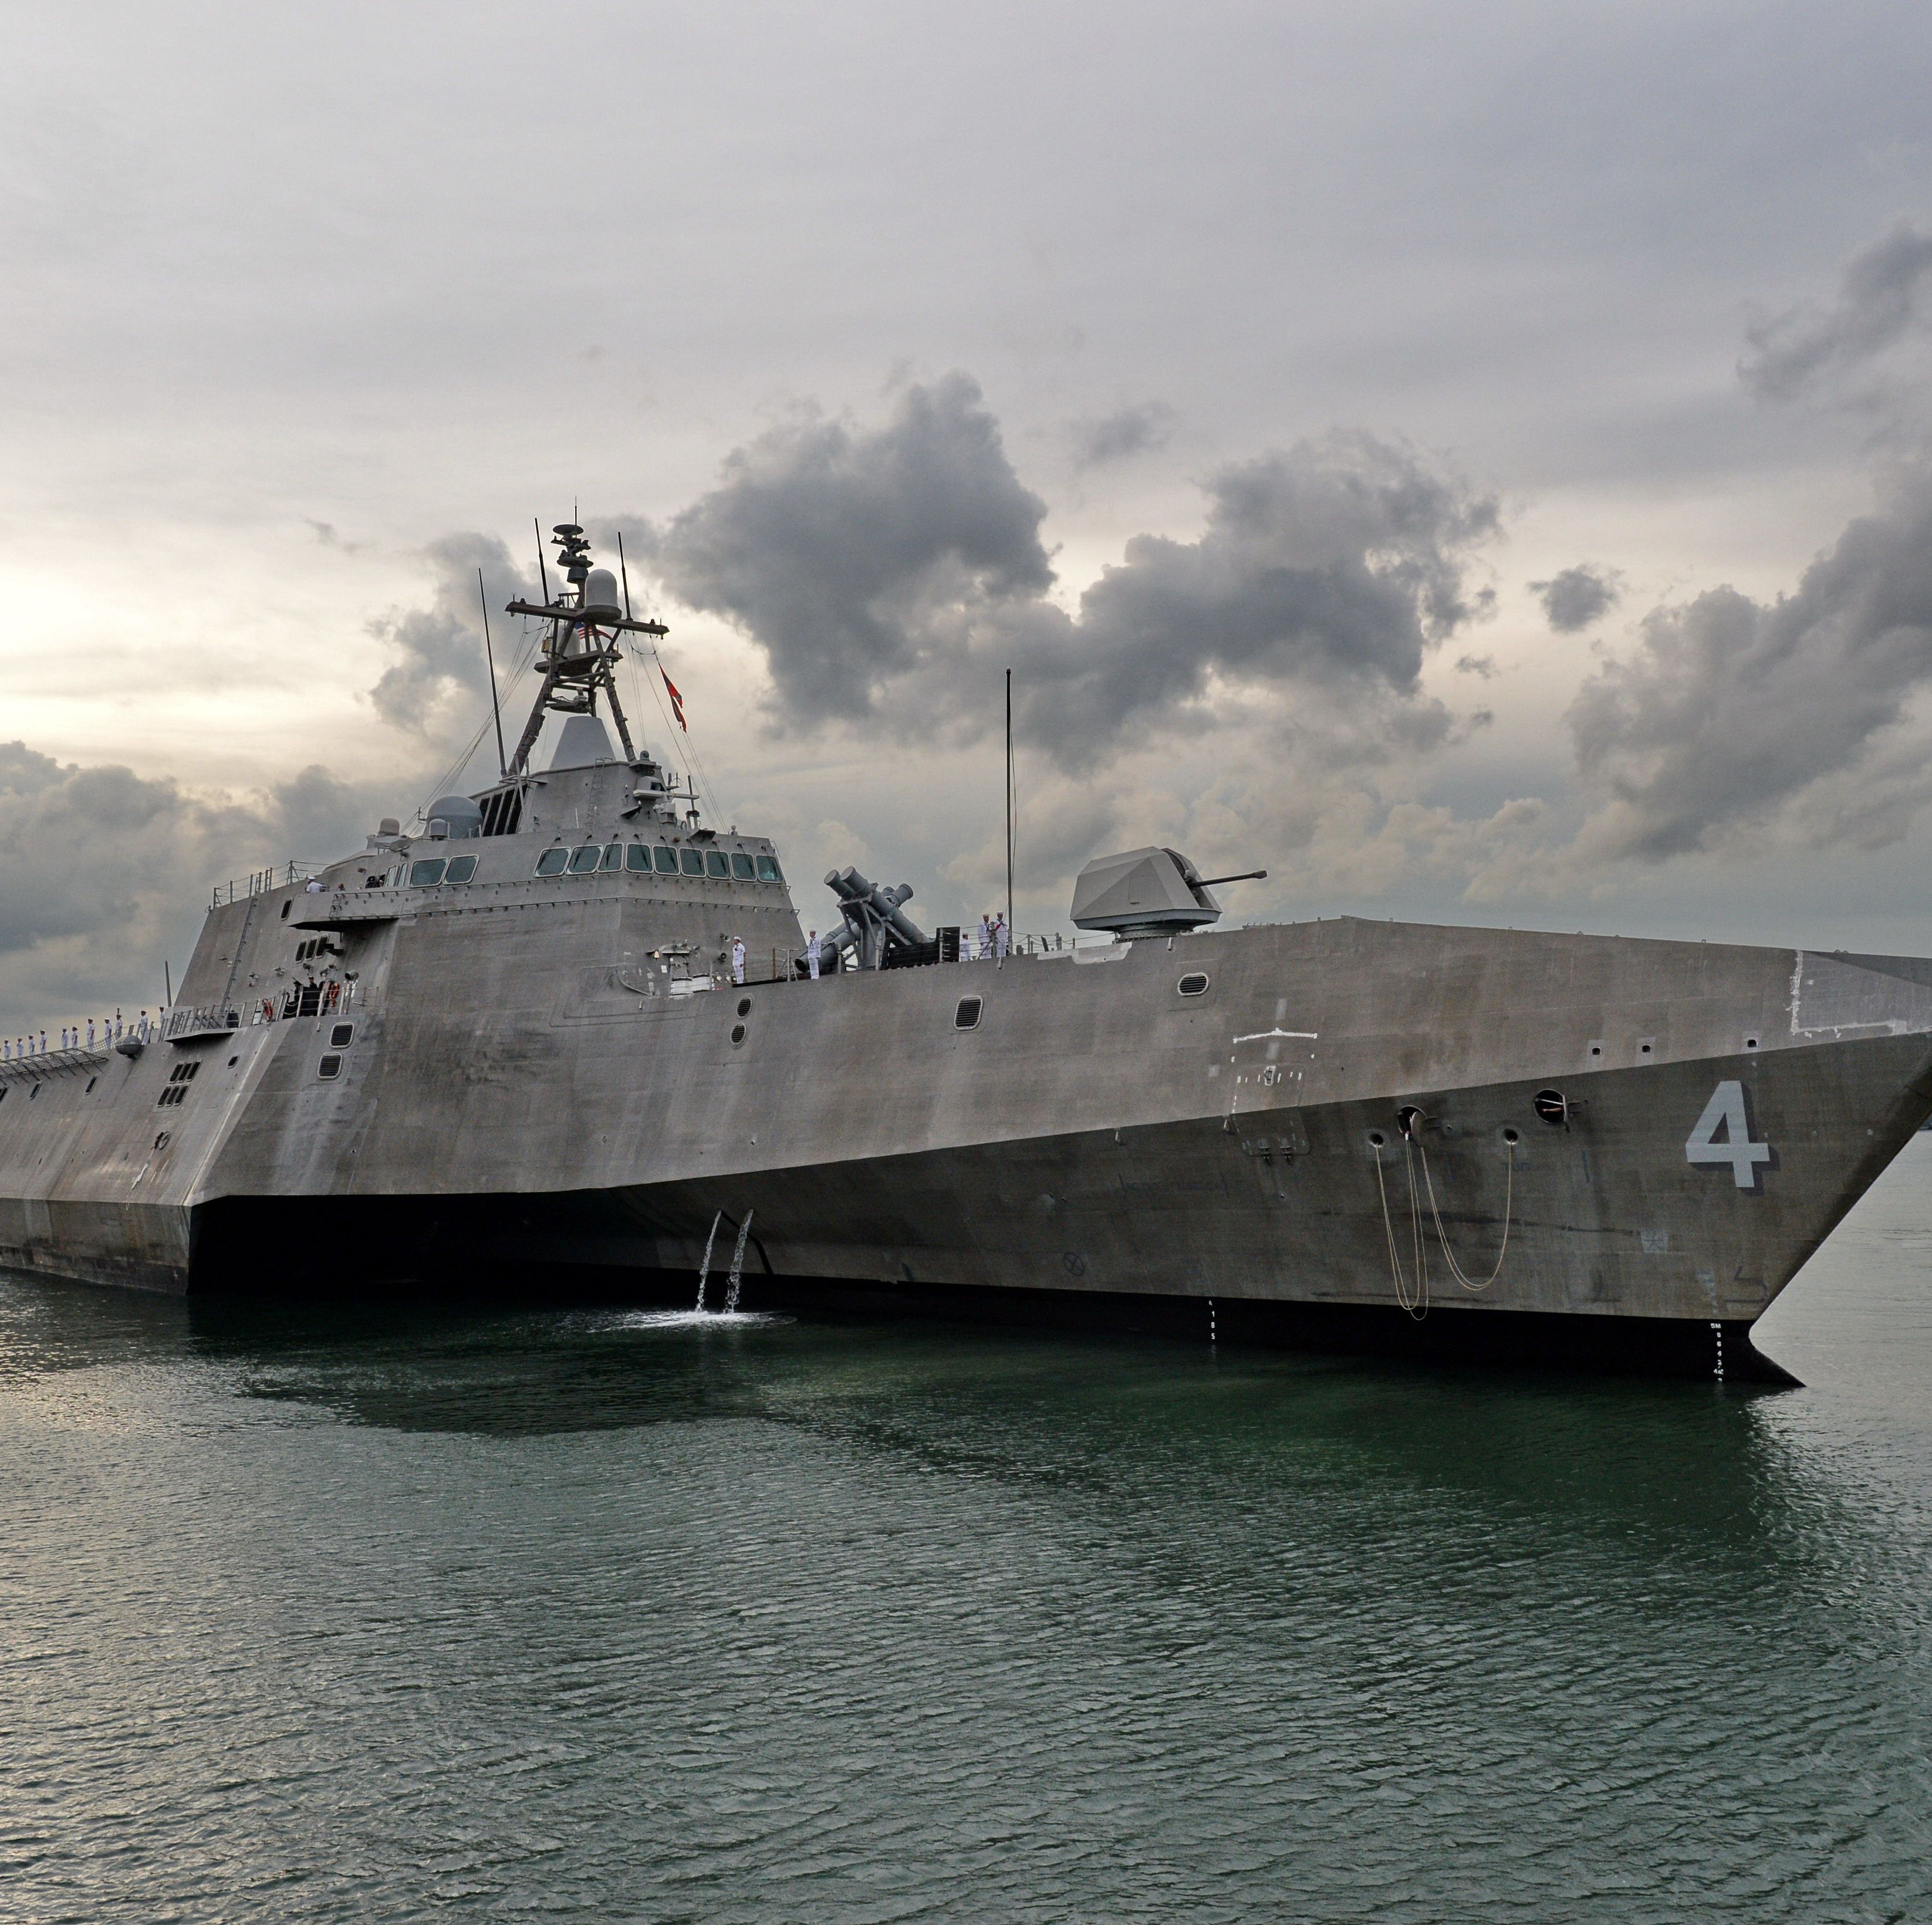 Hull Cracks Are Drastically Limiting U.S. Littoral Combat Ship Speeds